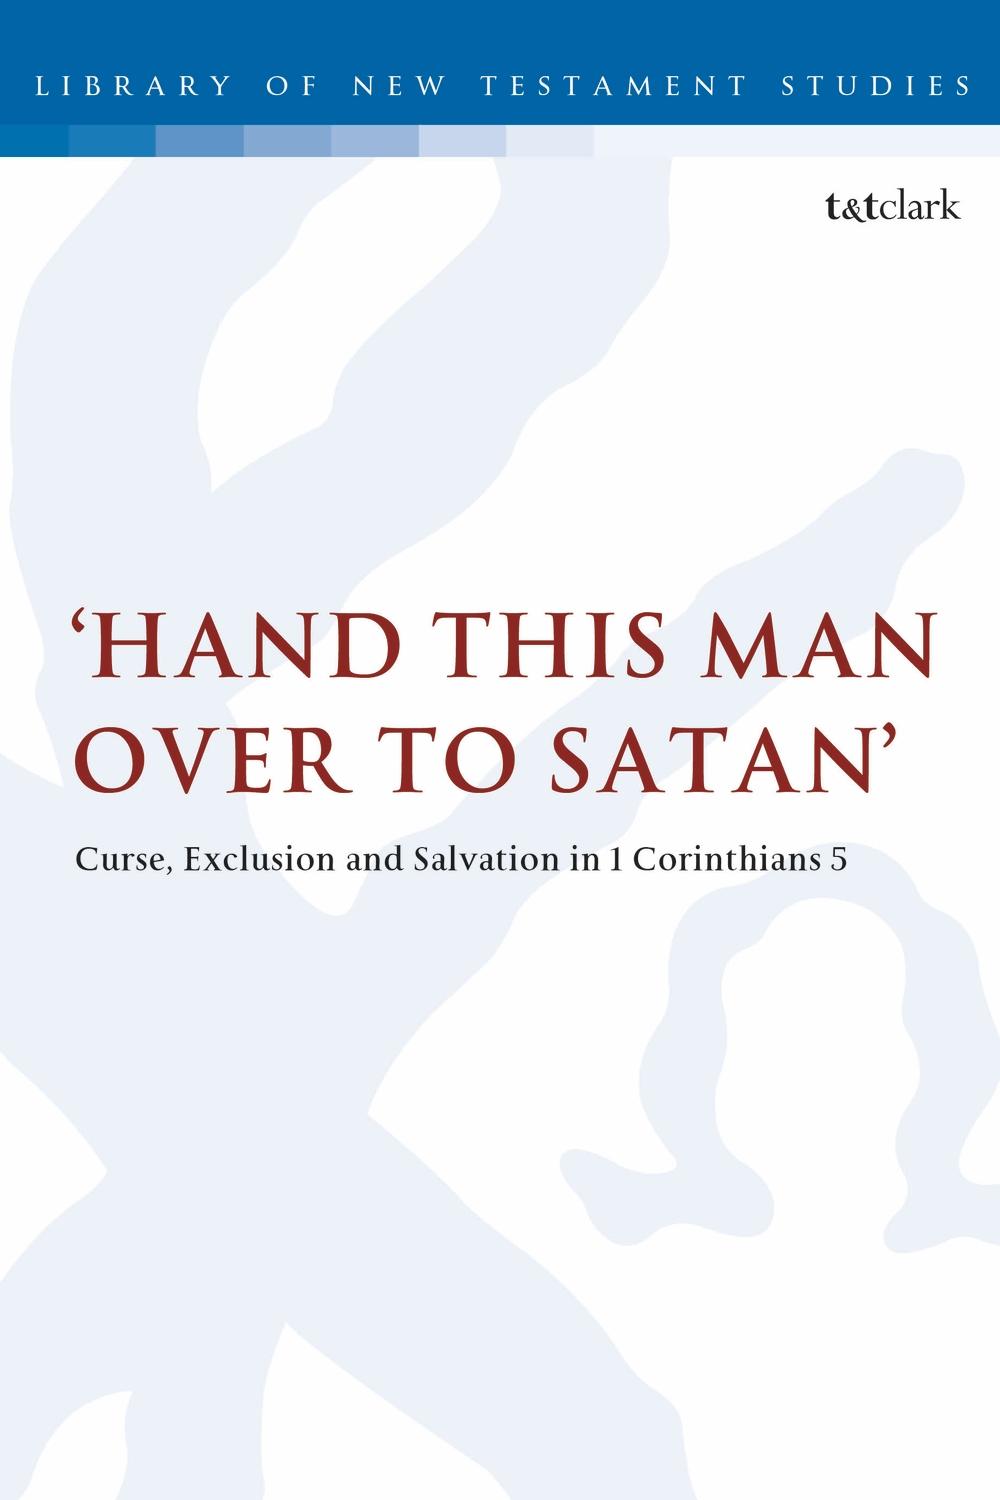 'Hand this man over to Satan' - David Raymond Smith